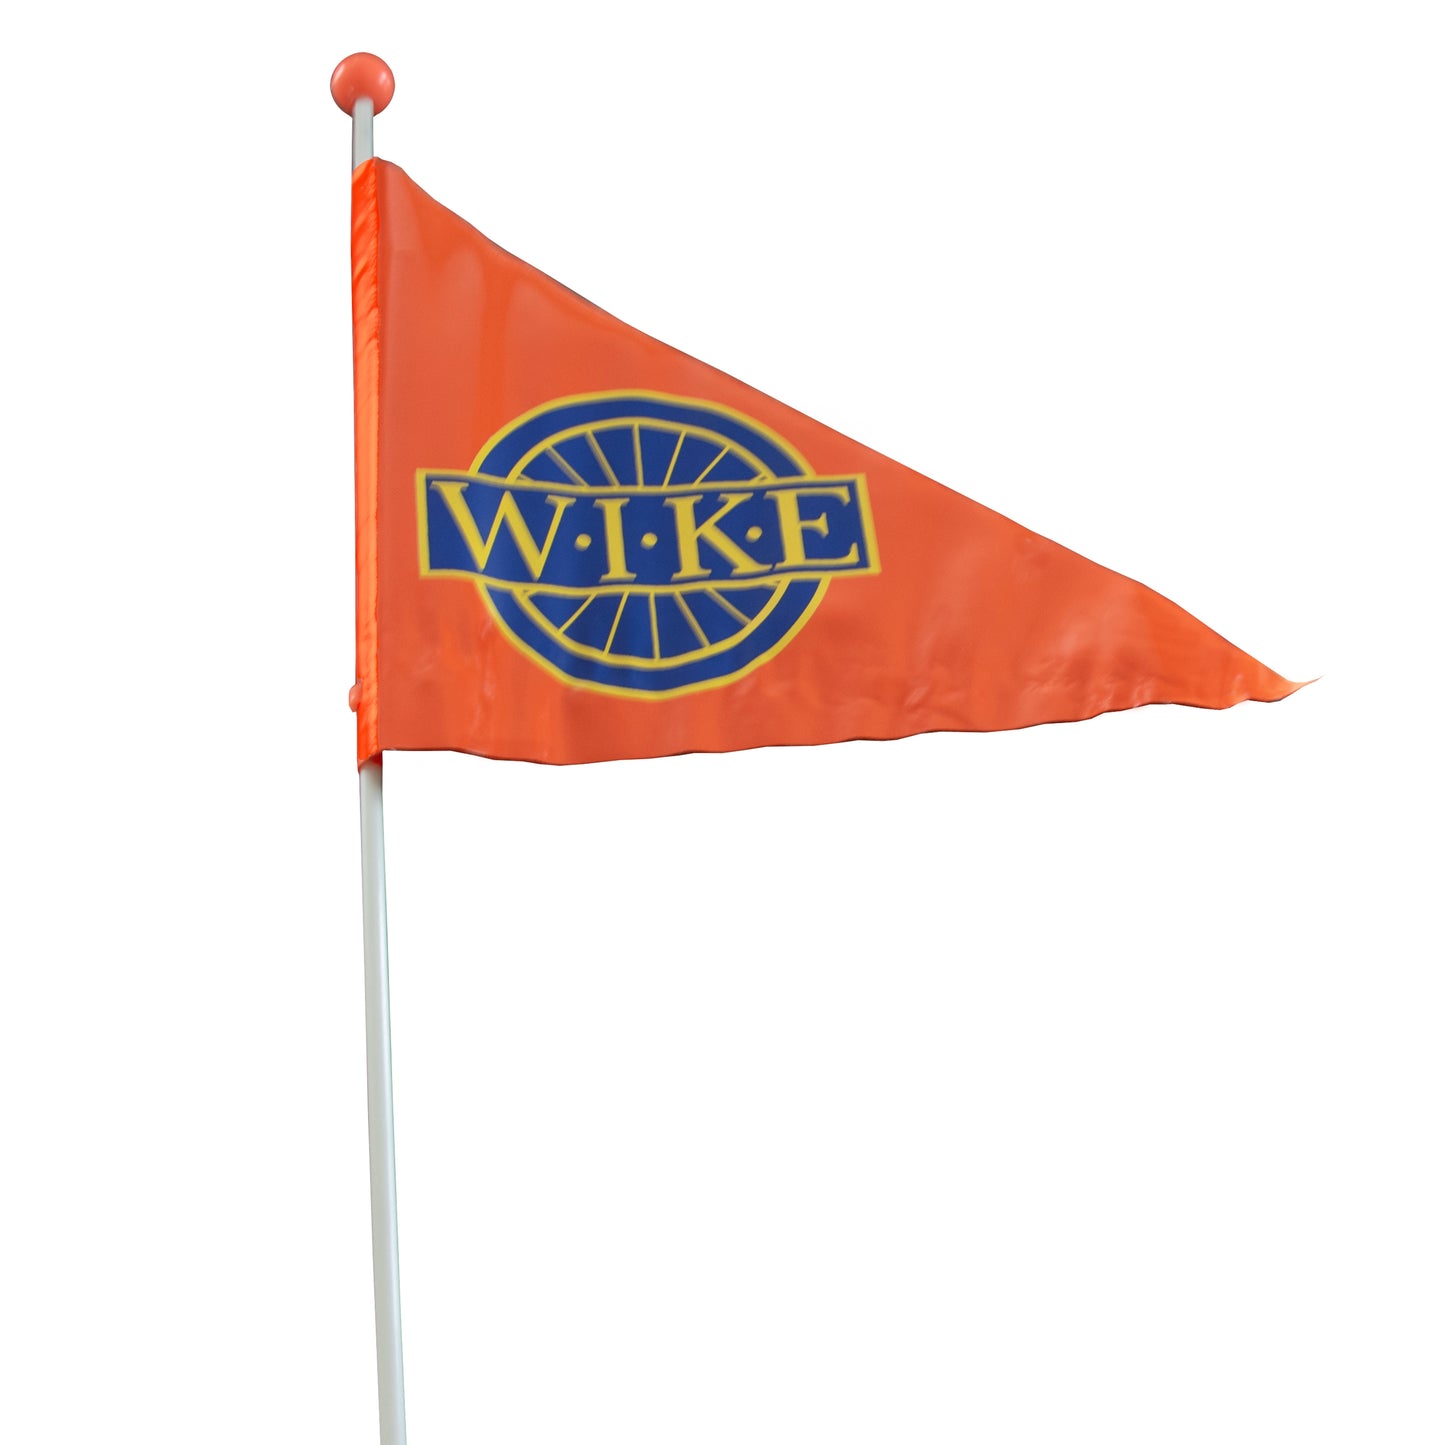 Wike Safety Flag & Pole